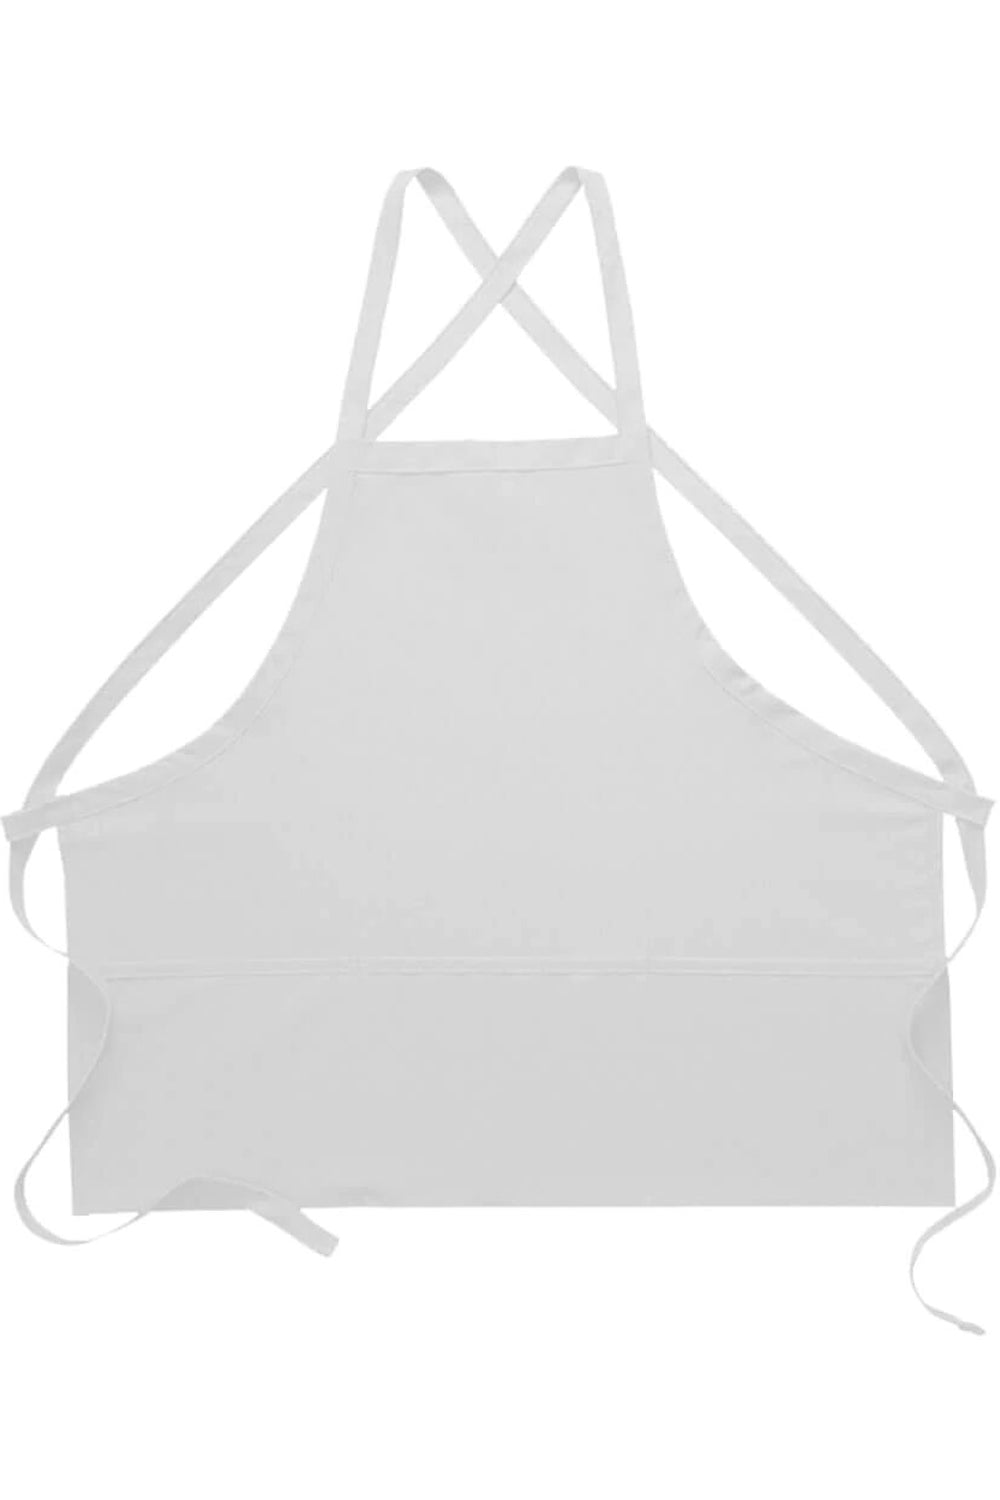 White criss cross back three pocket restaurant server bib apron